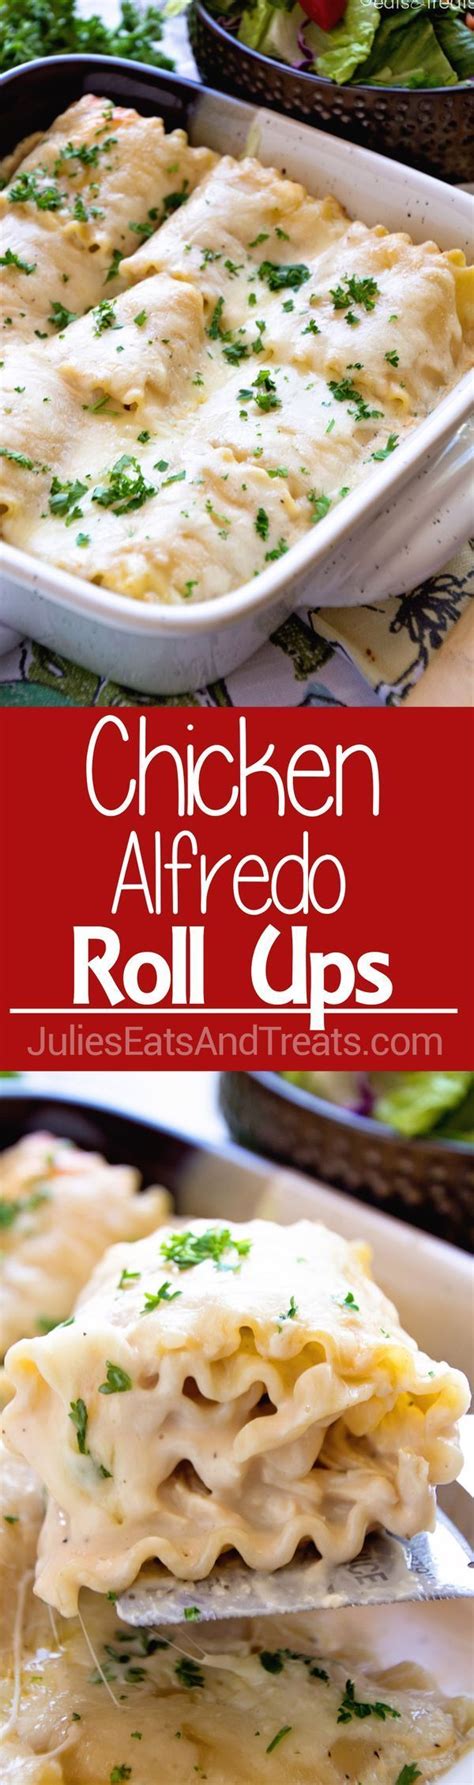 Chicken Alfredo Roll Ups Julies Eats And Treats Recipes Yummy